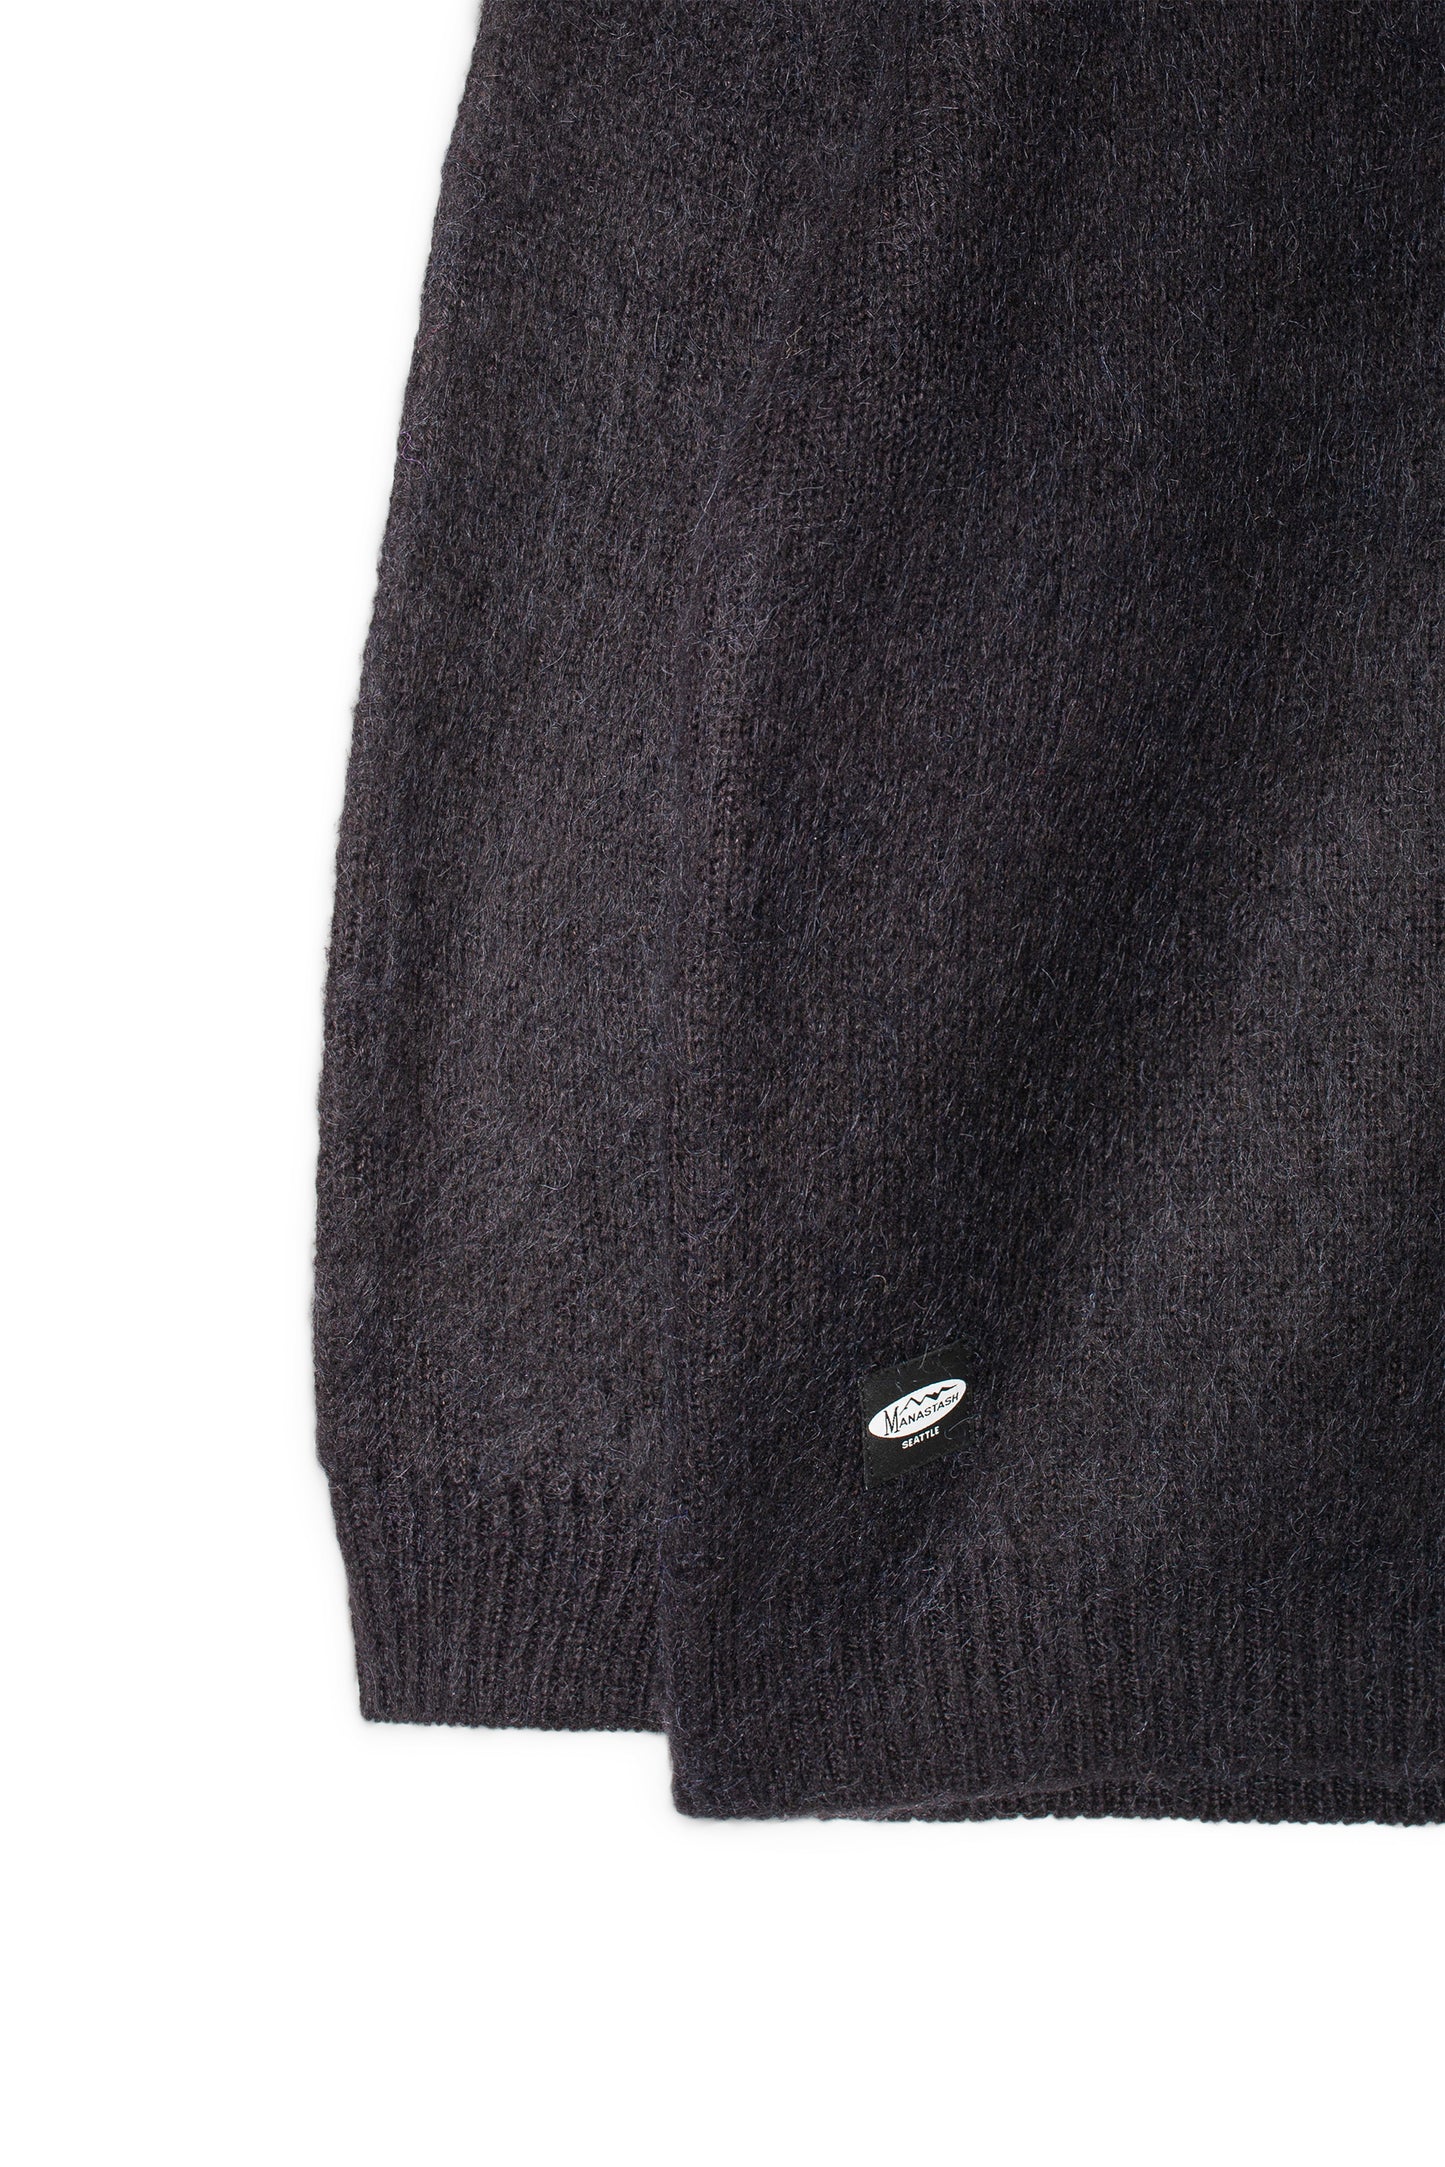 Aberdeen Sweater (Black)